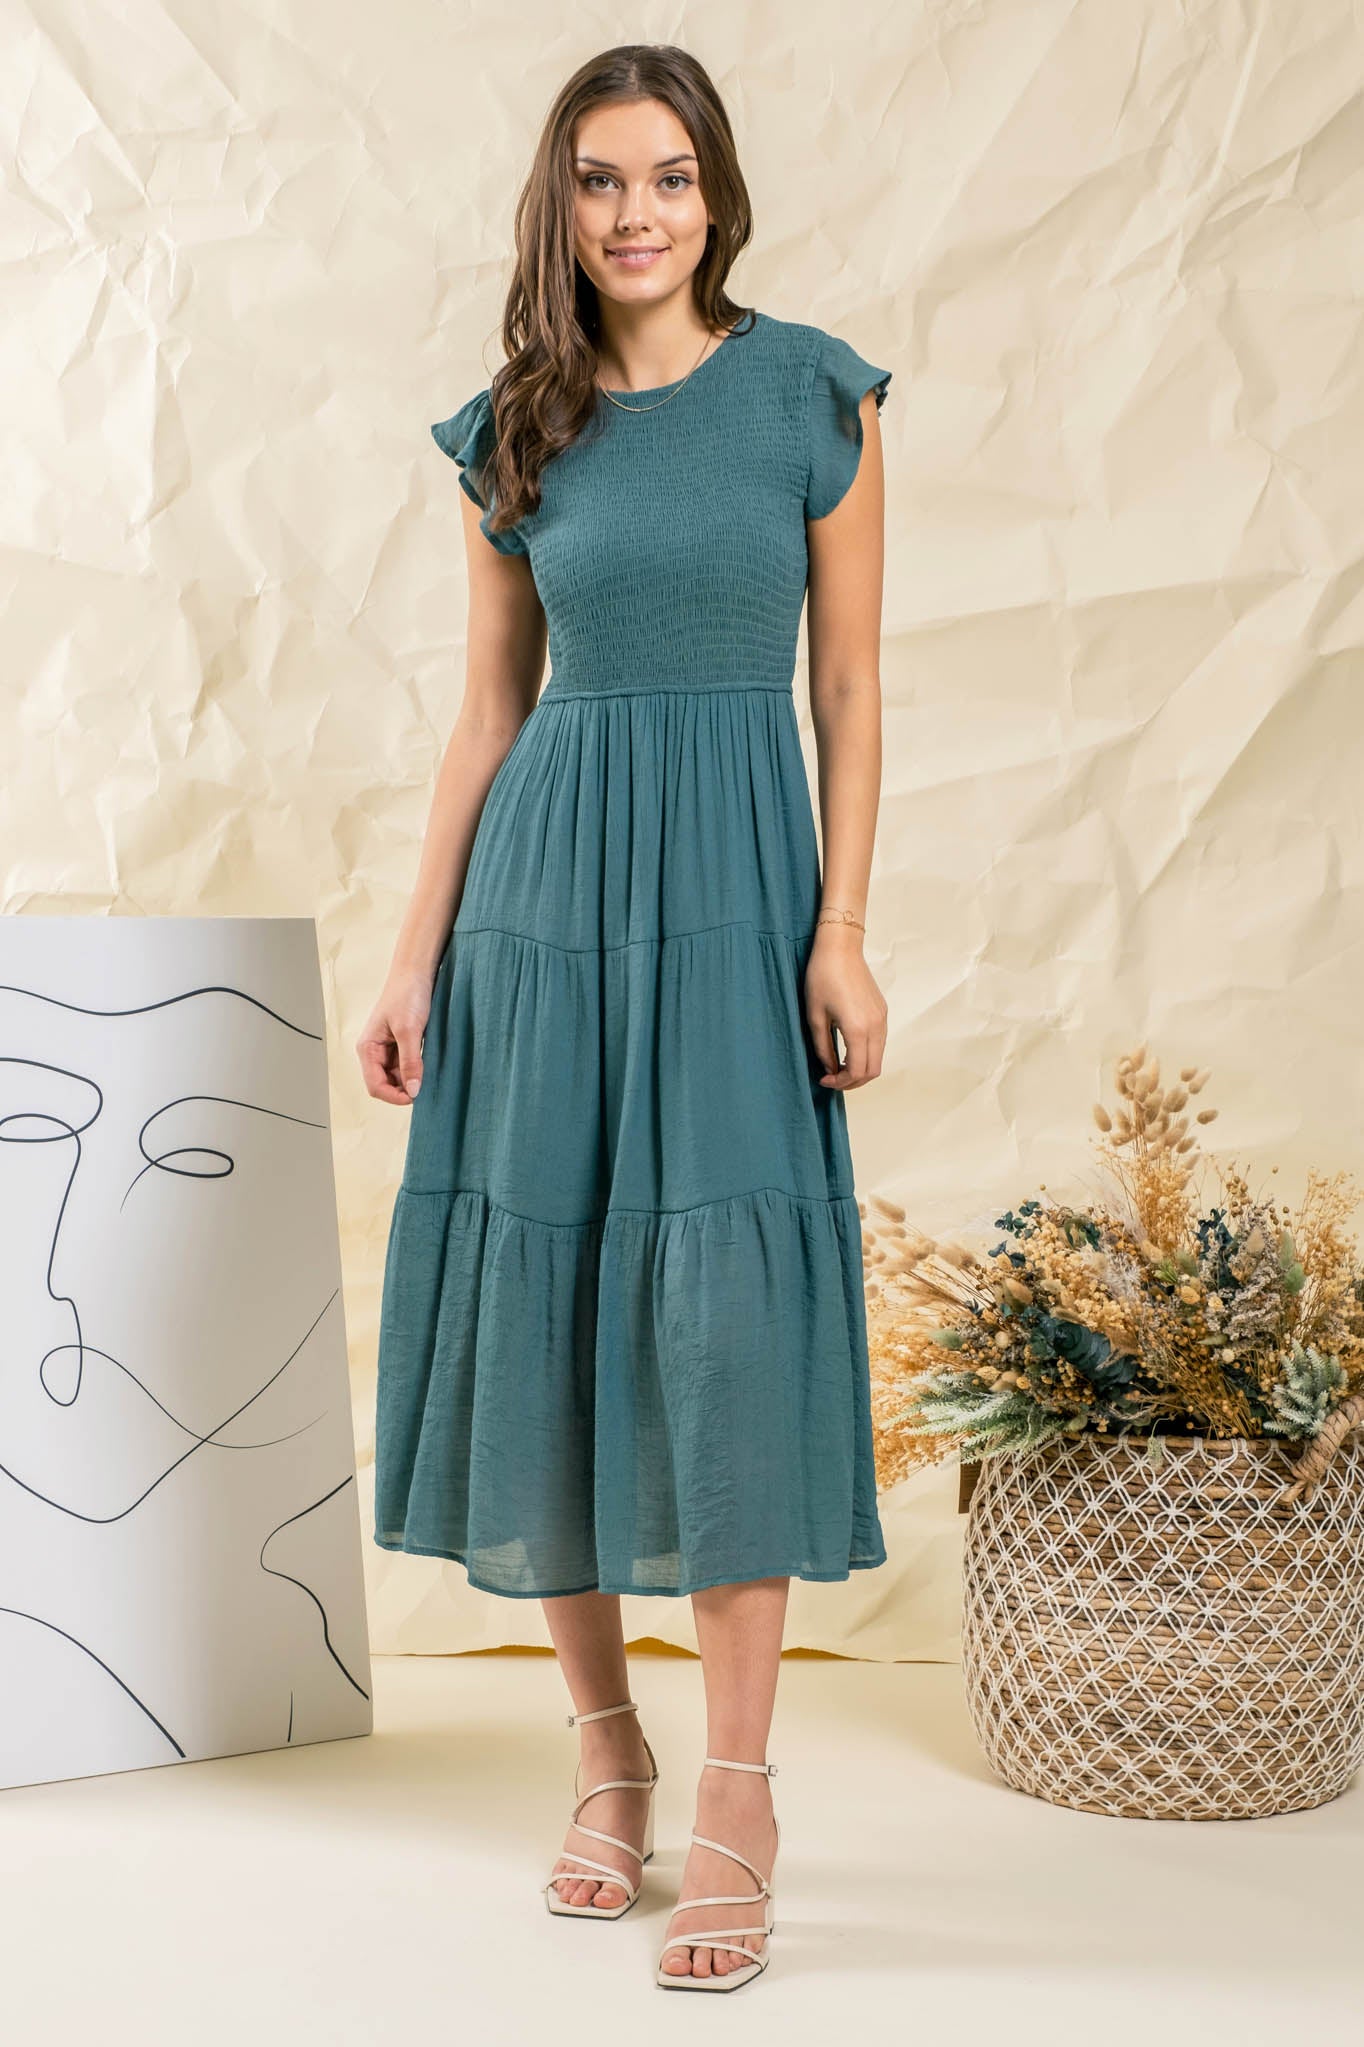 Smocked Tiered Midi Dress - Teal - Regular and Plus